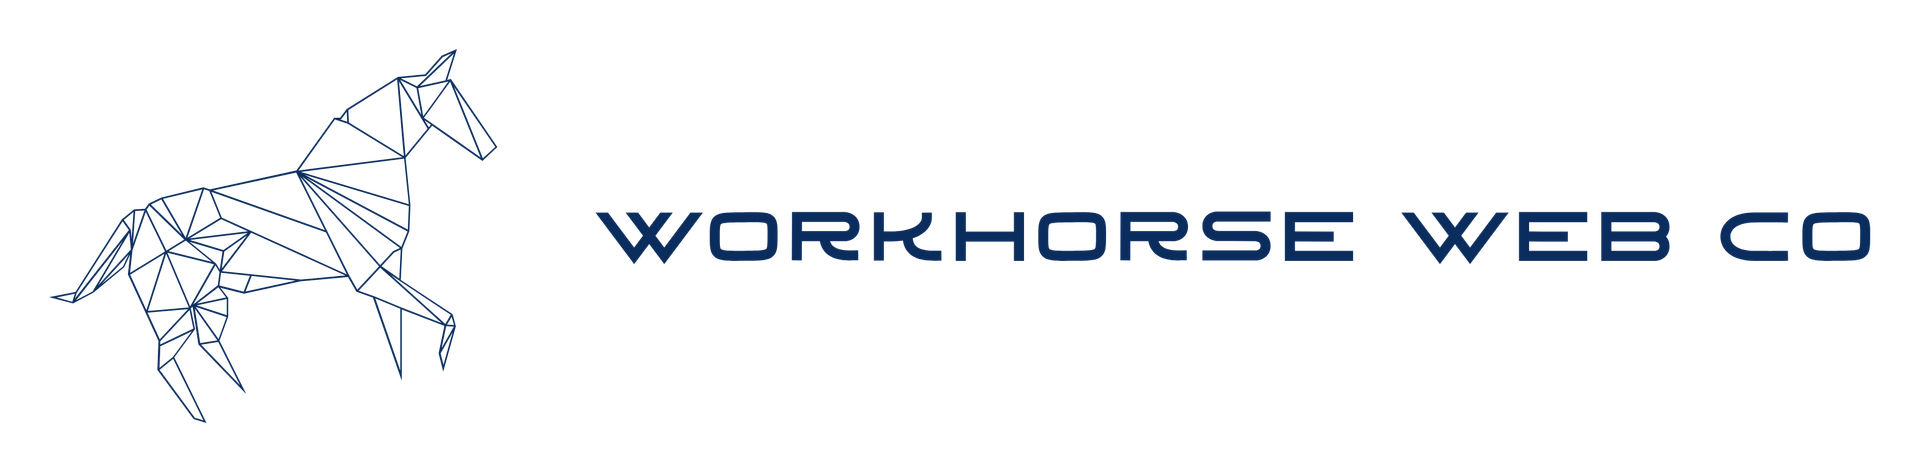 Workhorse Web Co.